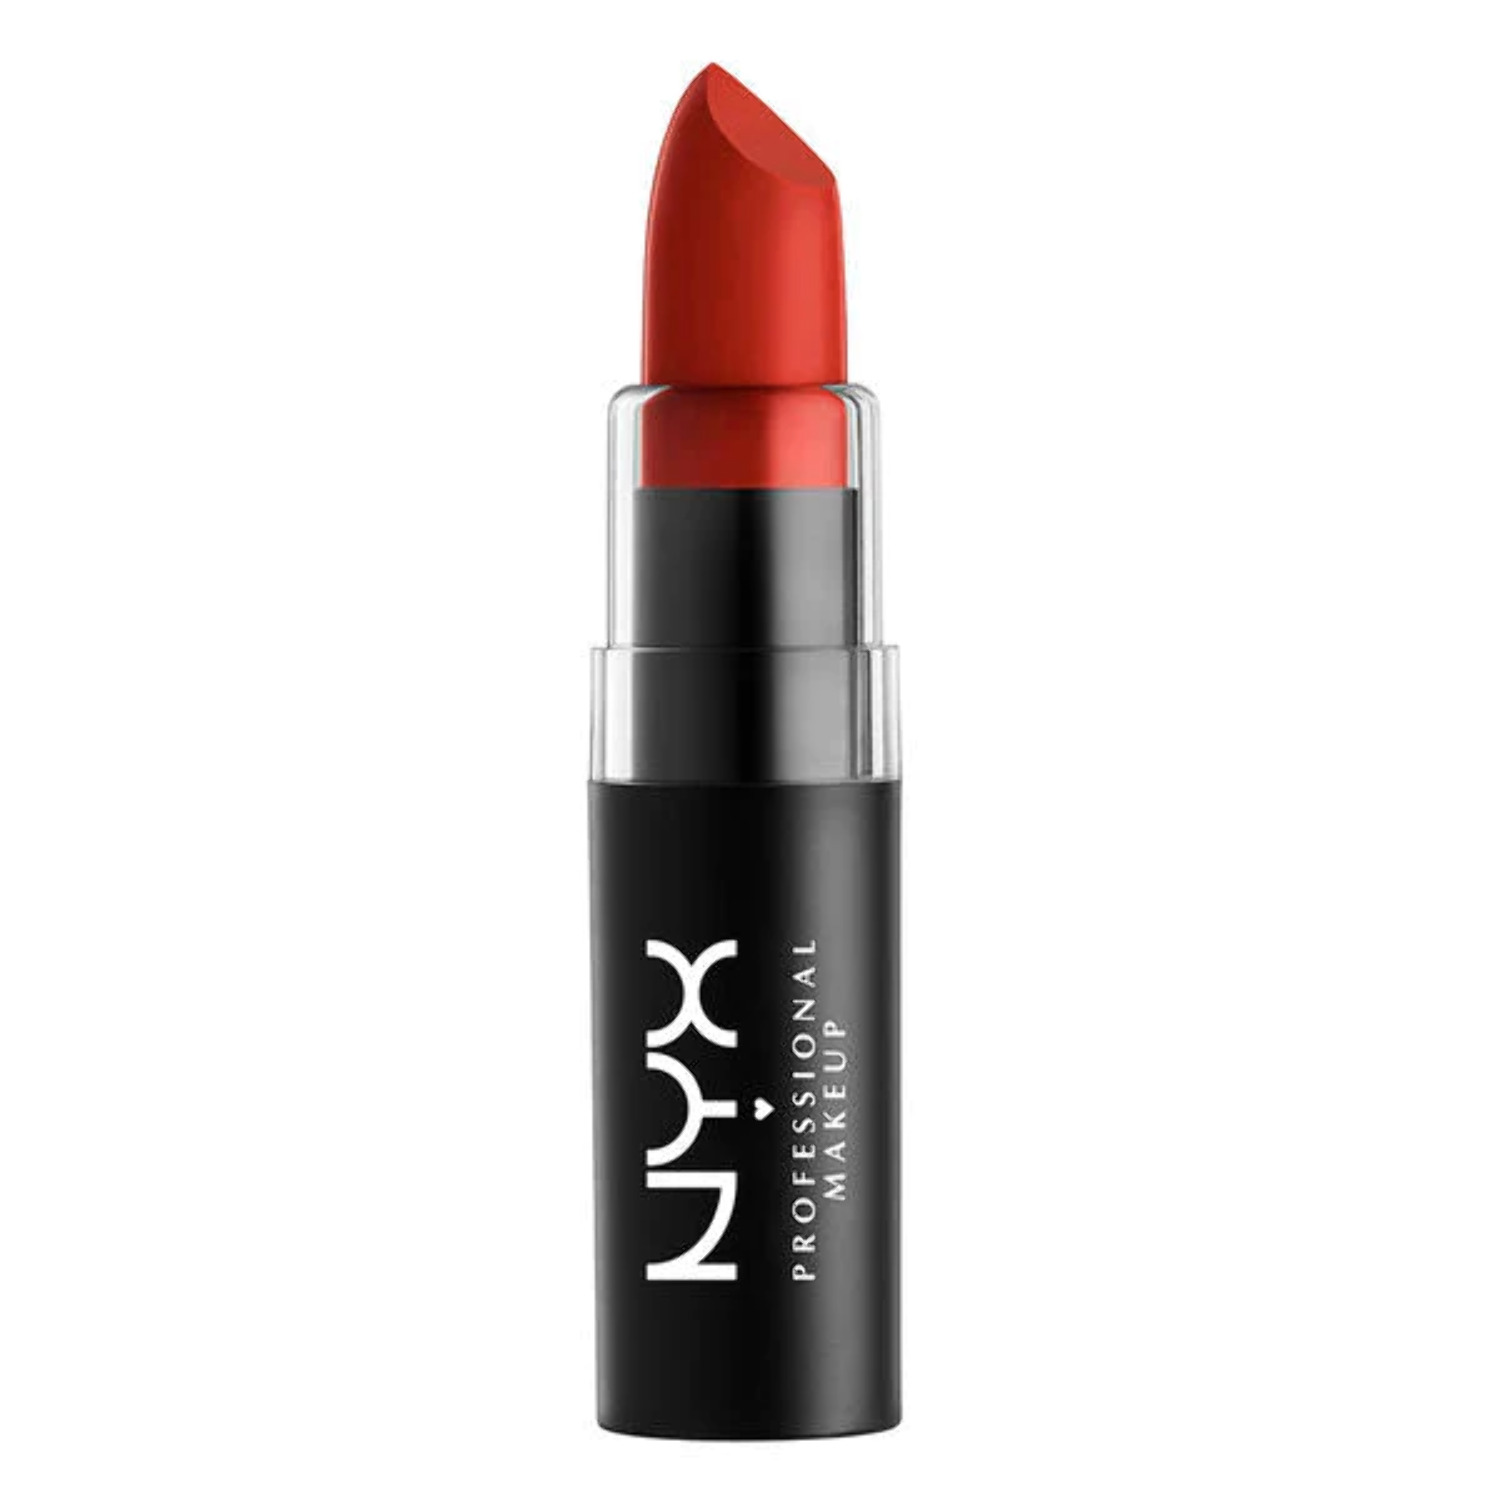 NYX Matte Lipstick - Indie Flick - image 3 of 11